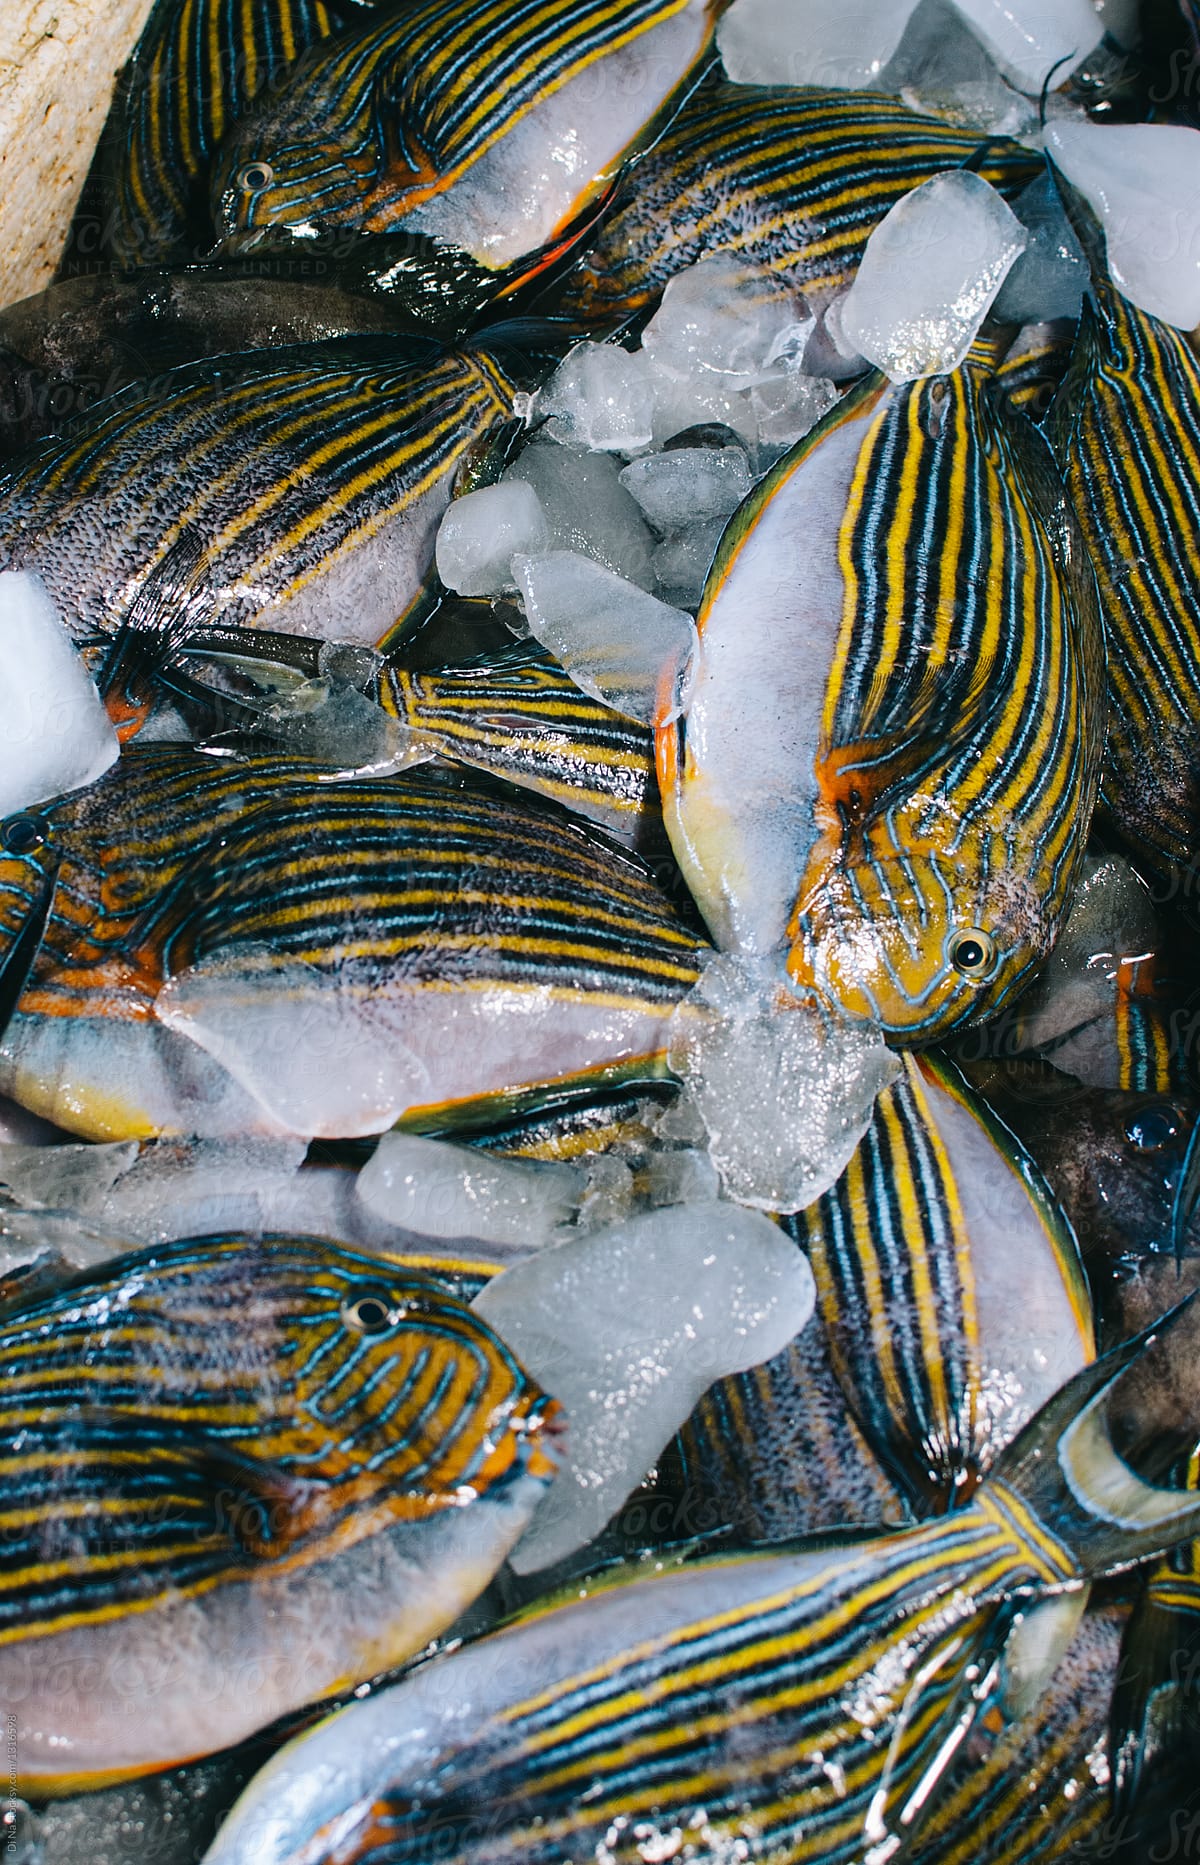 Stripe exotic fish at local market